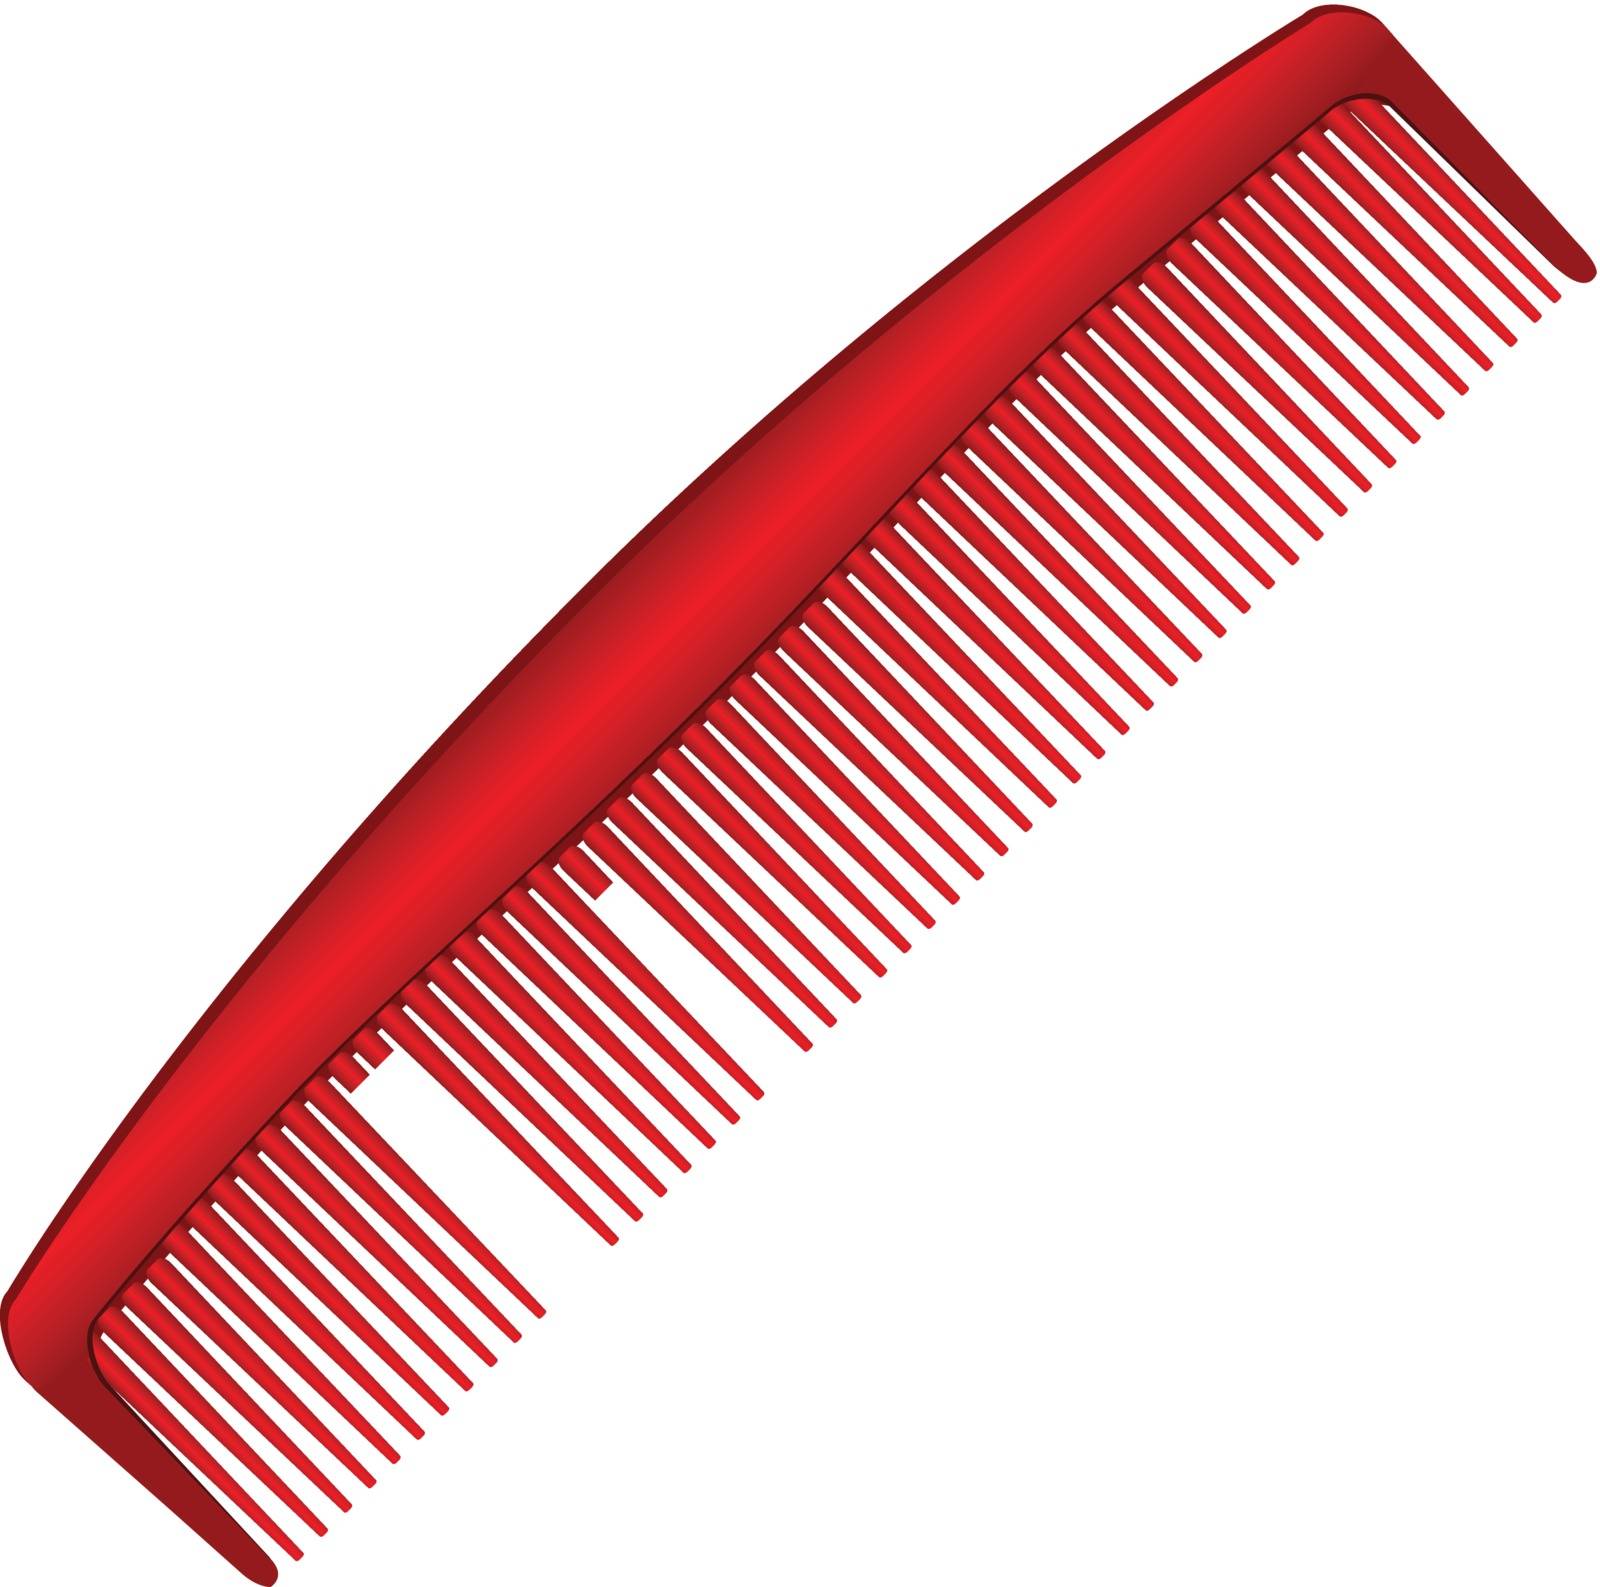 Broken men comb with bad teeth. Vector illustration.